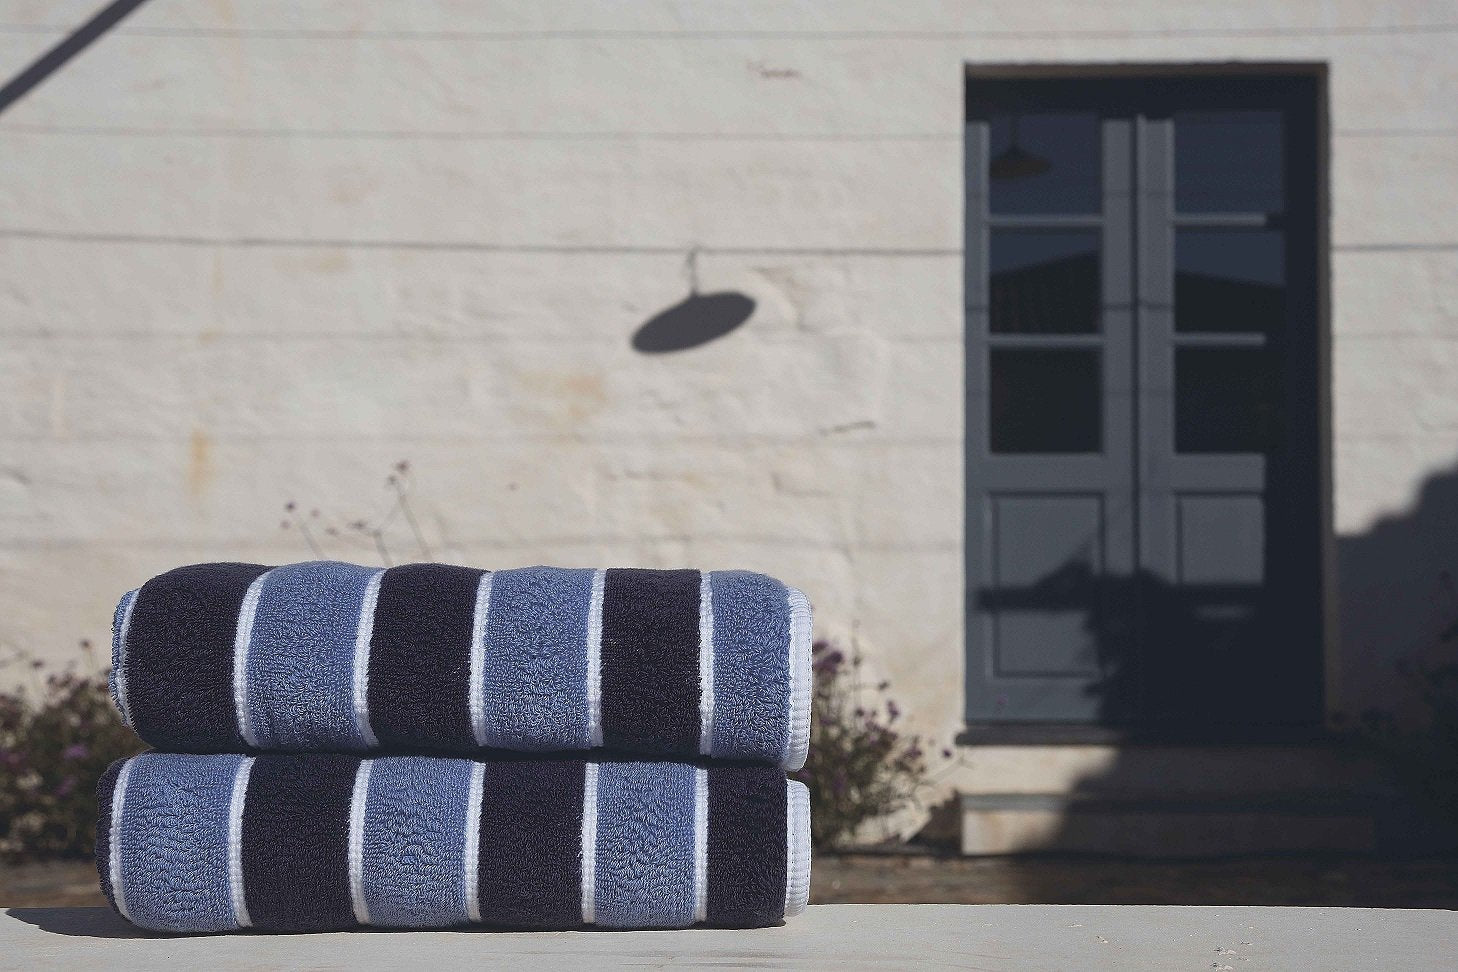 navy blue bath towels